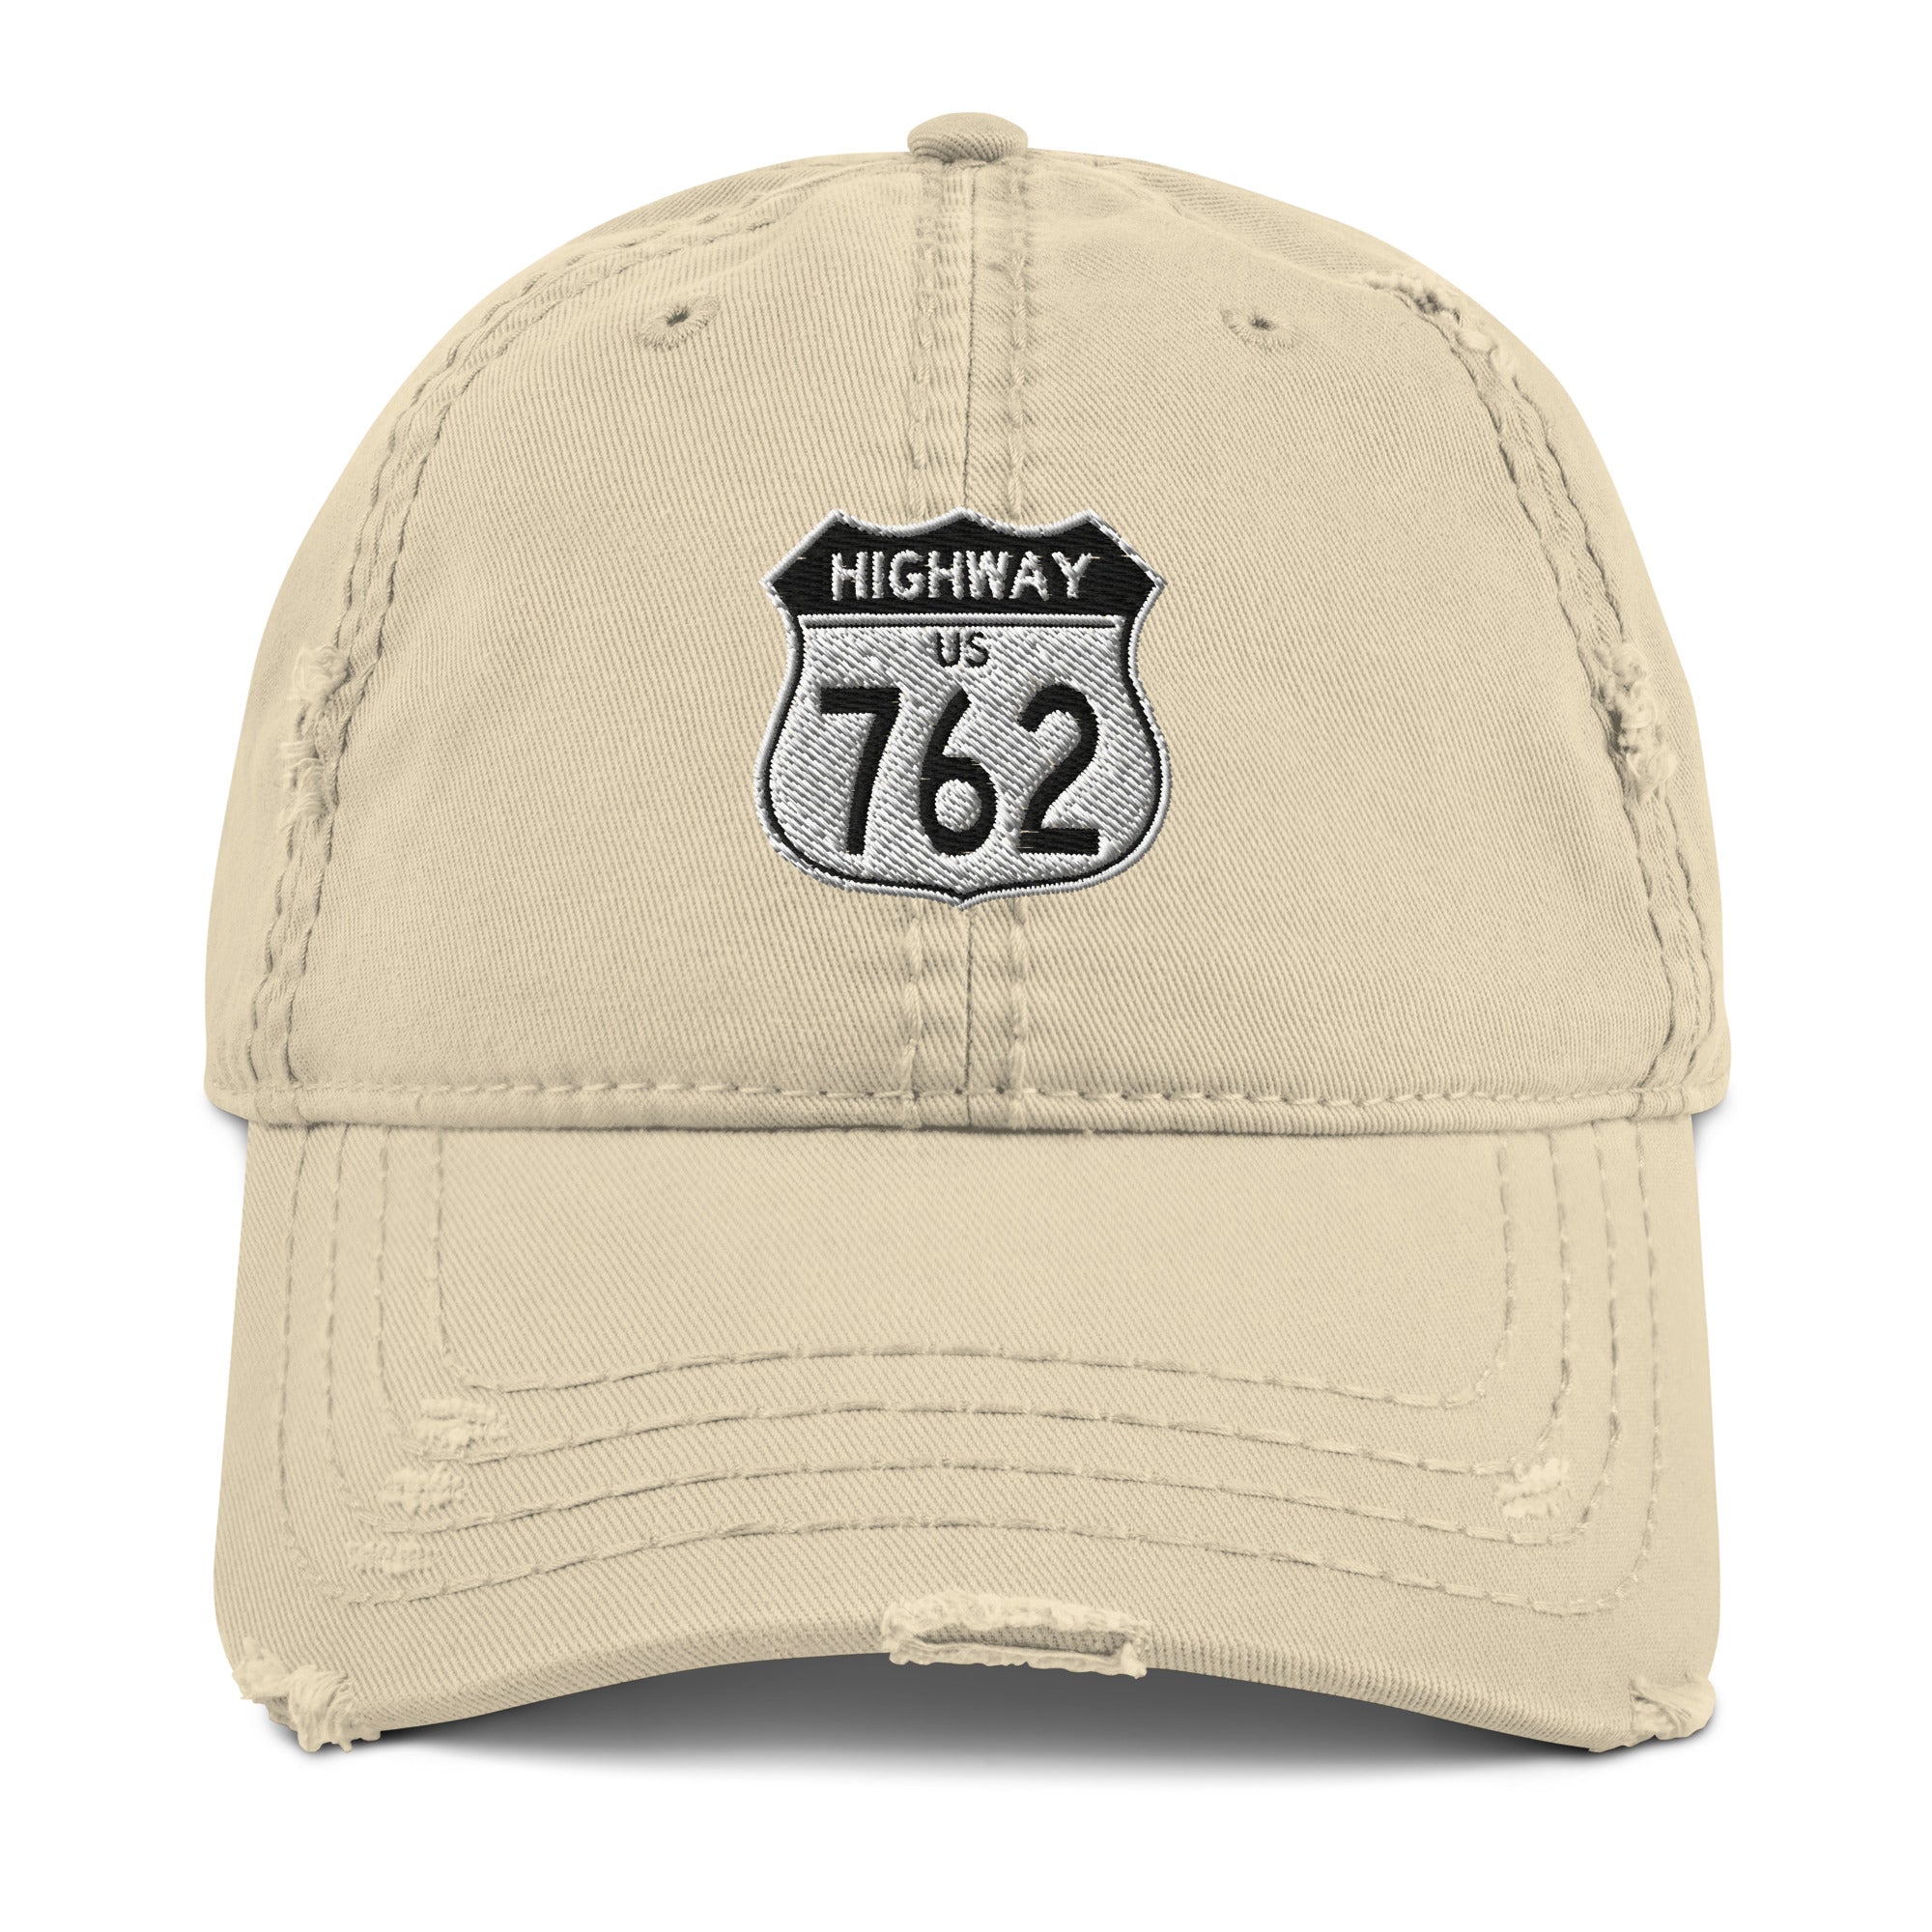 Highway 762 Distressed Dad Hat